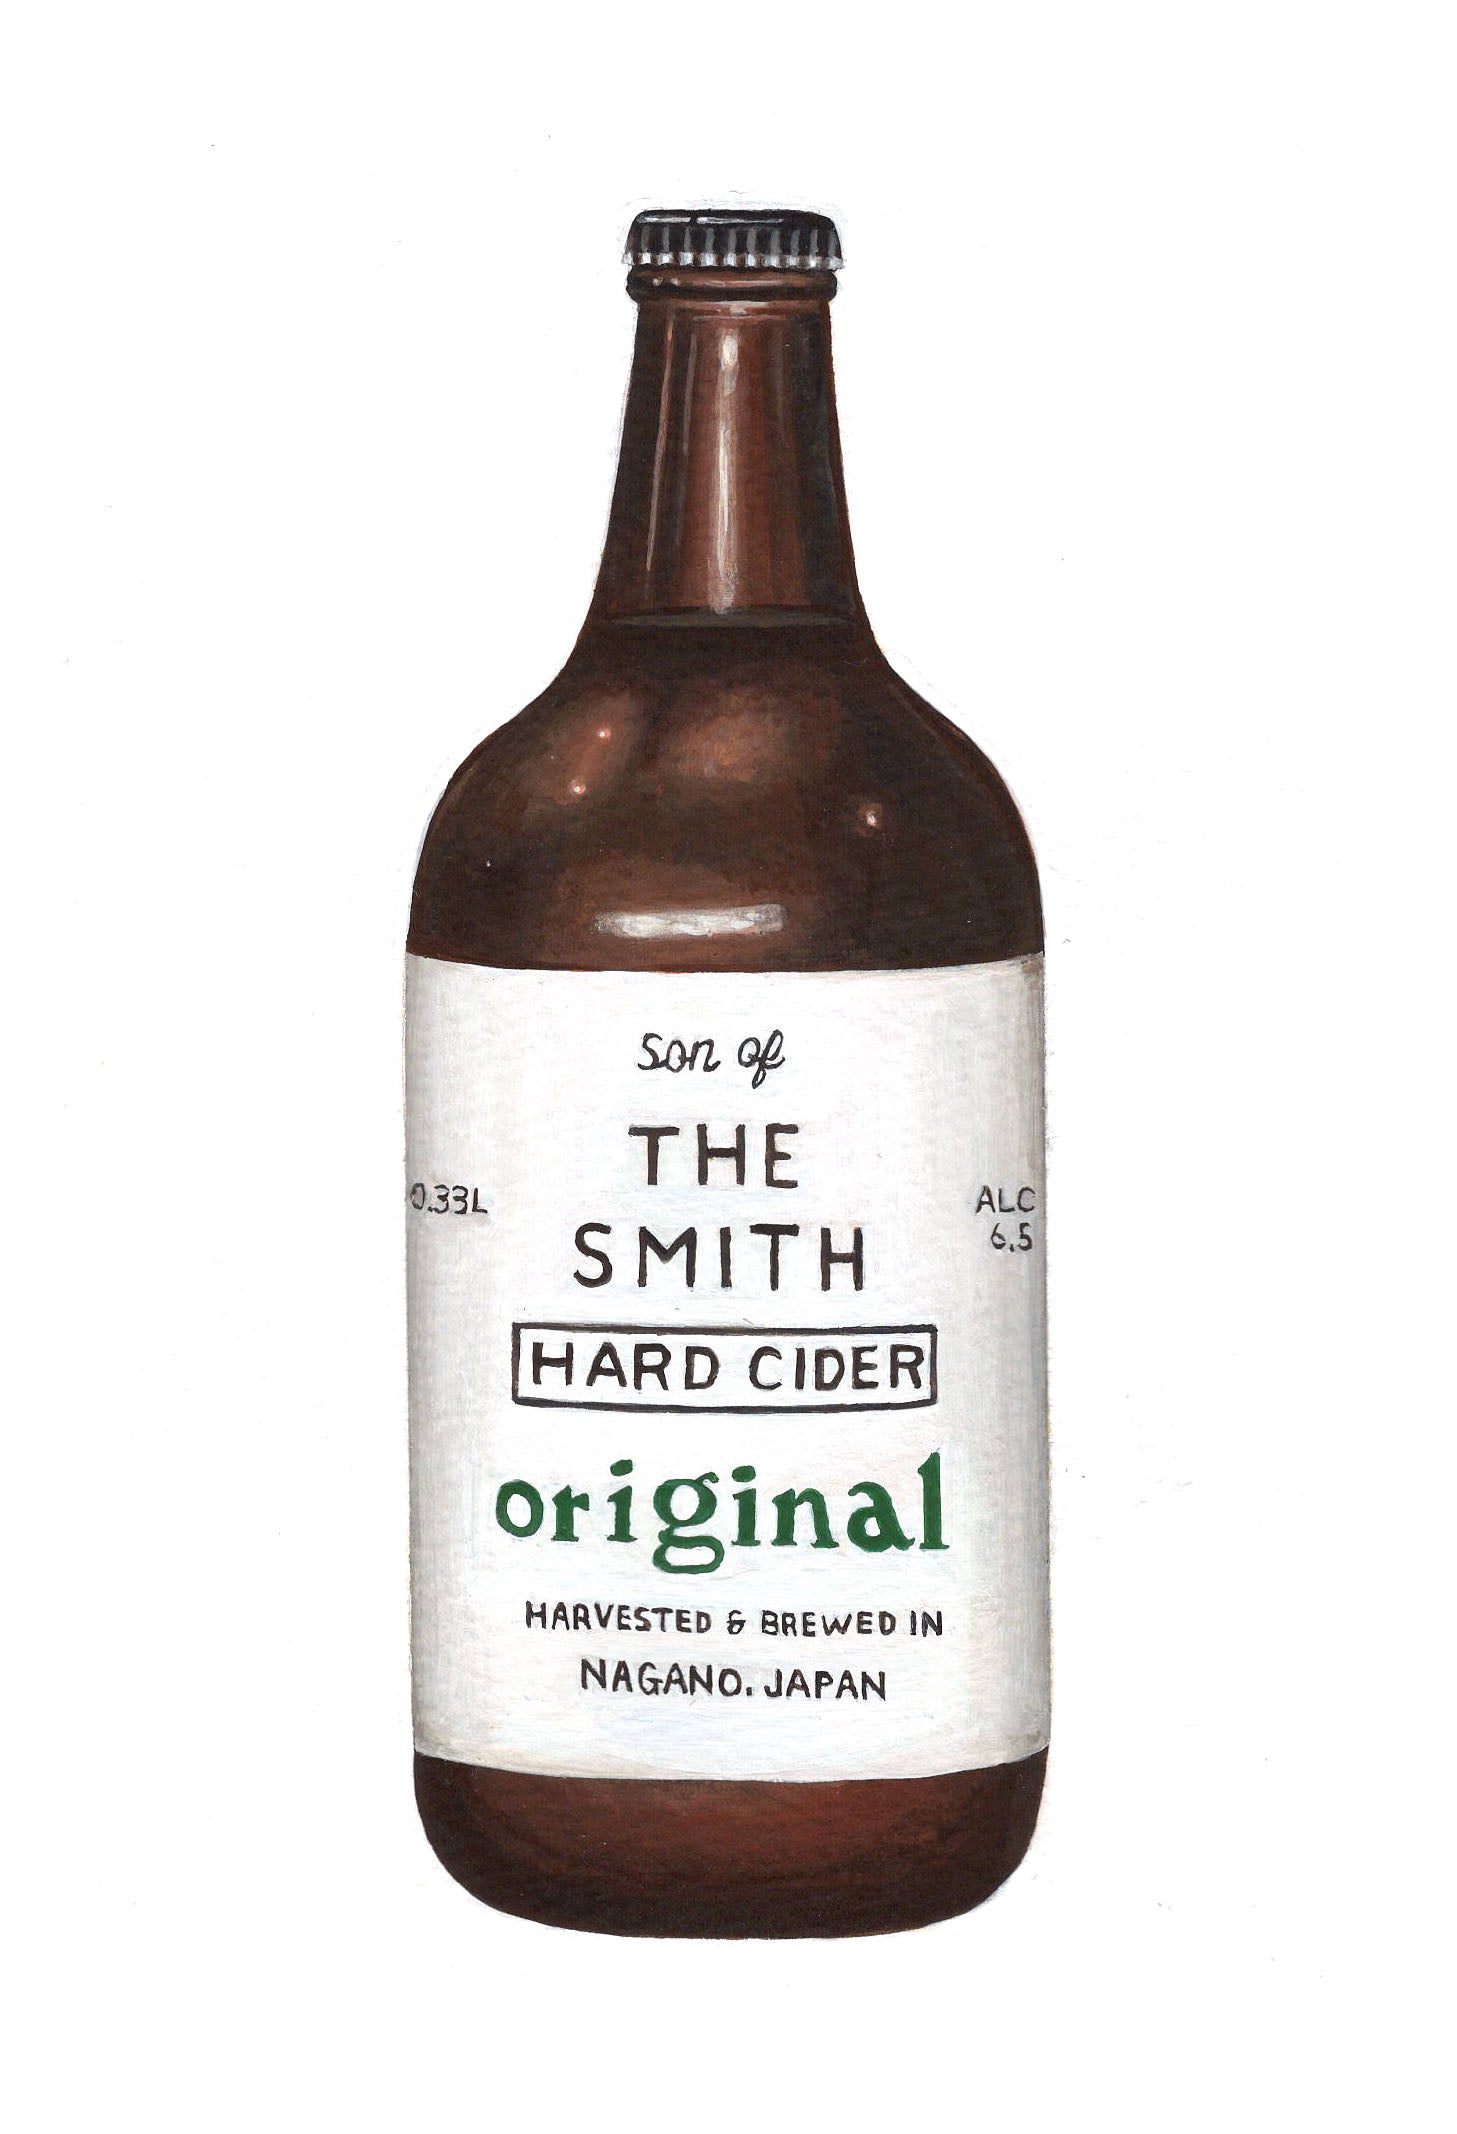 Son of the Smith Hard Cider “original”